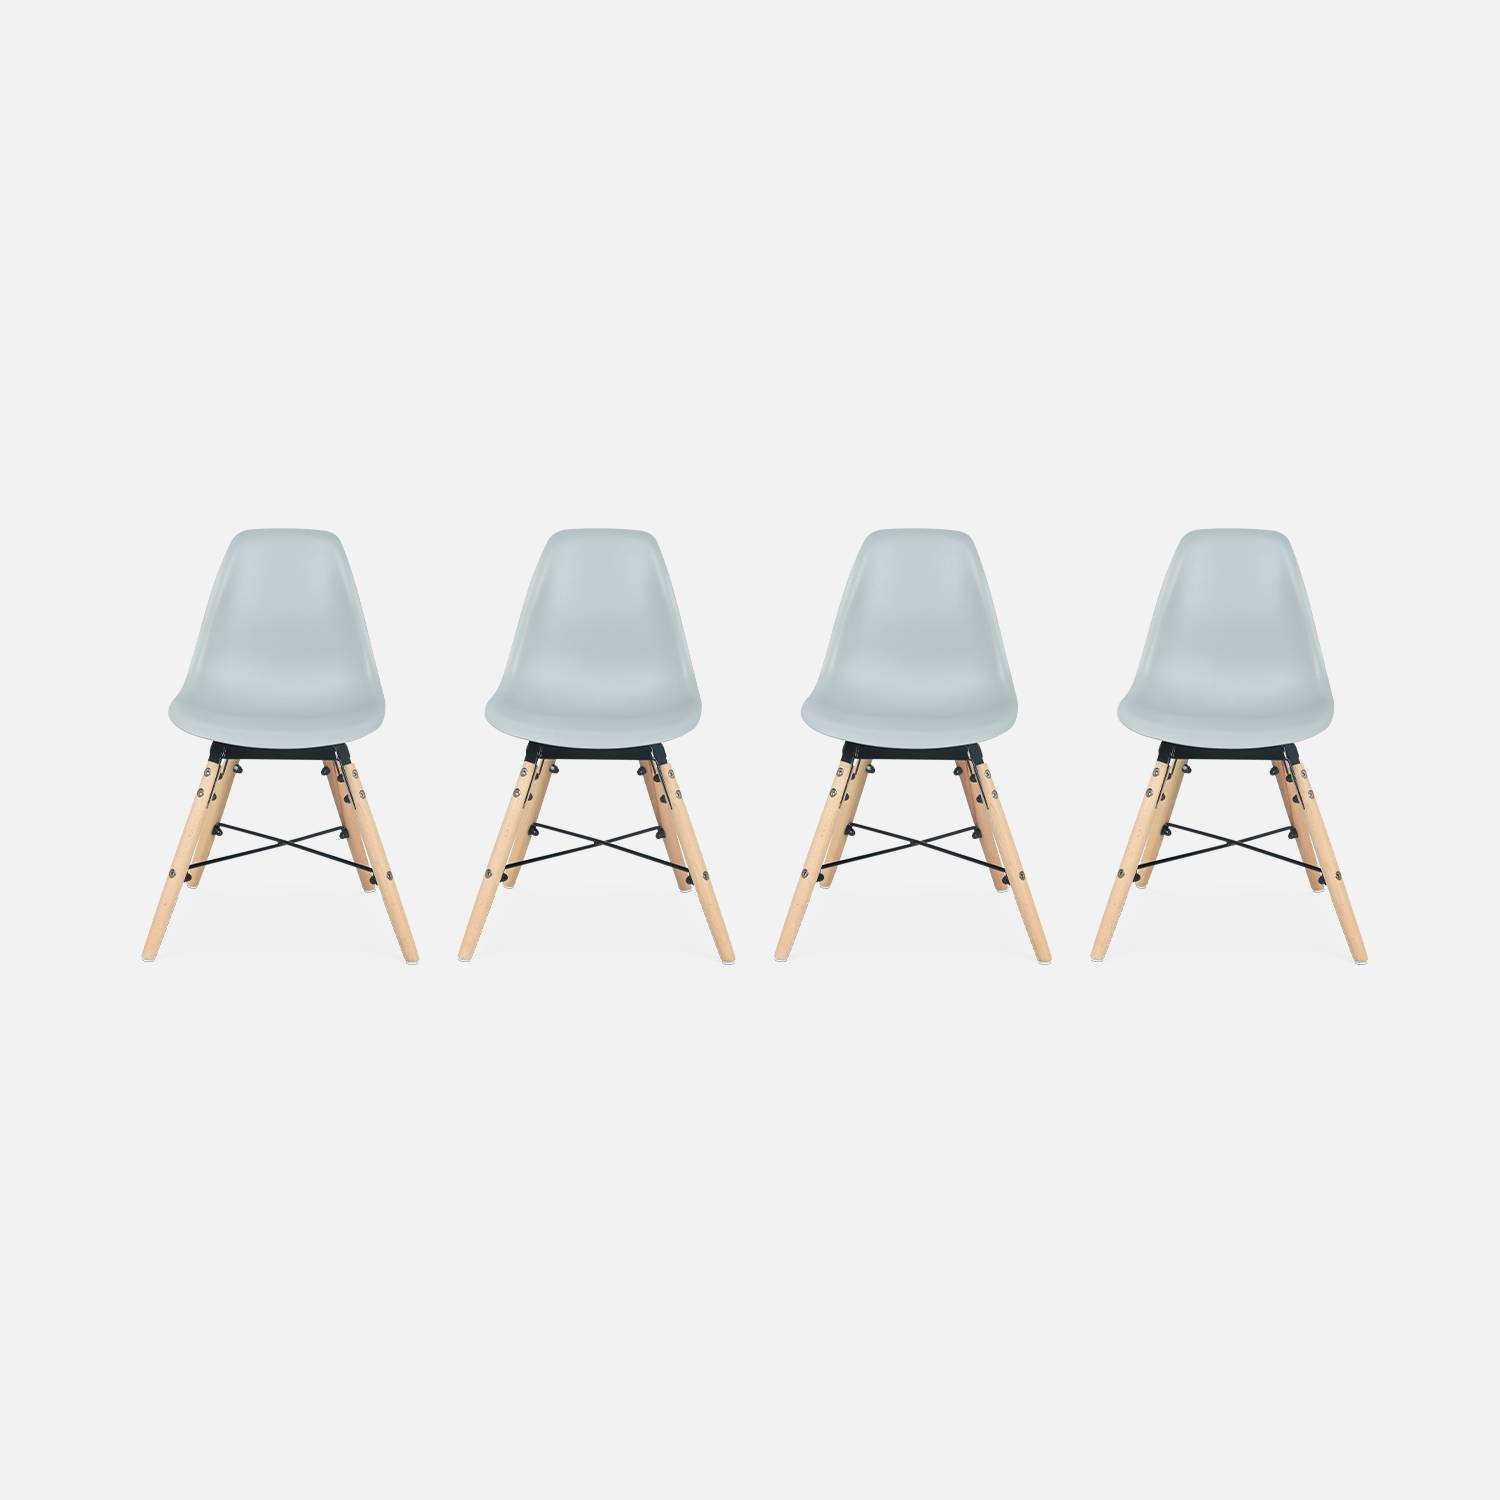 4er-Set Kinderstühle Grau in skandinavischem Stil, Buchenholz, B30,5 x T36 x H56cm, CHARLIE | sweeek